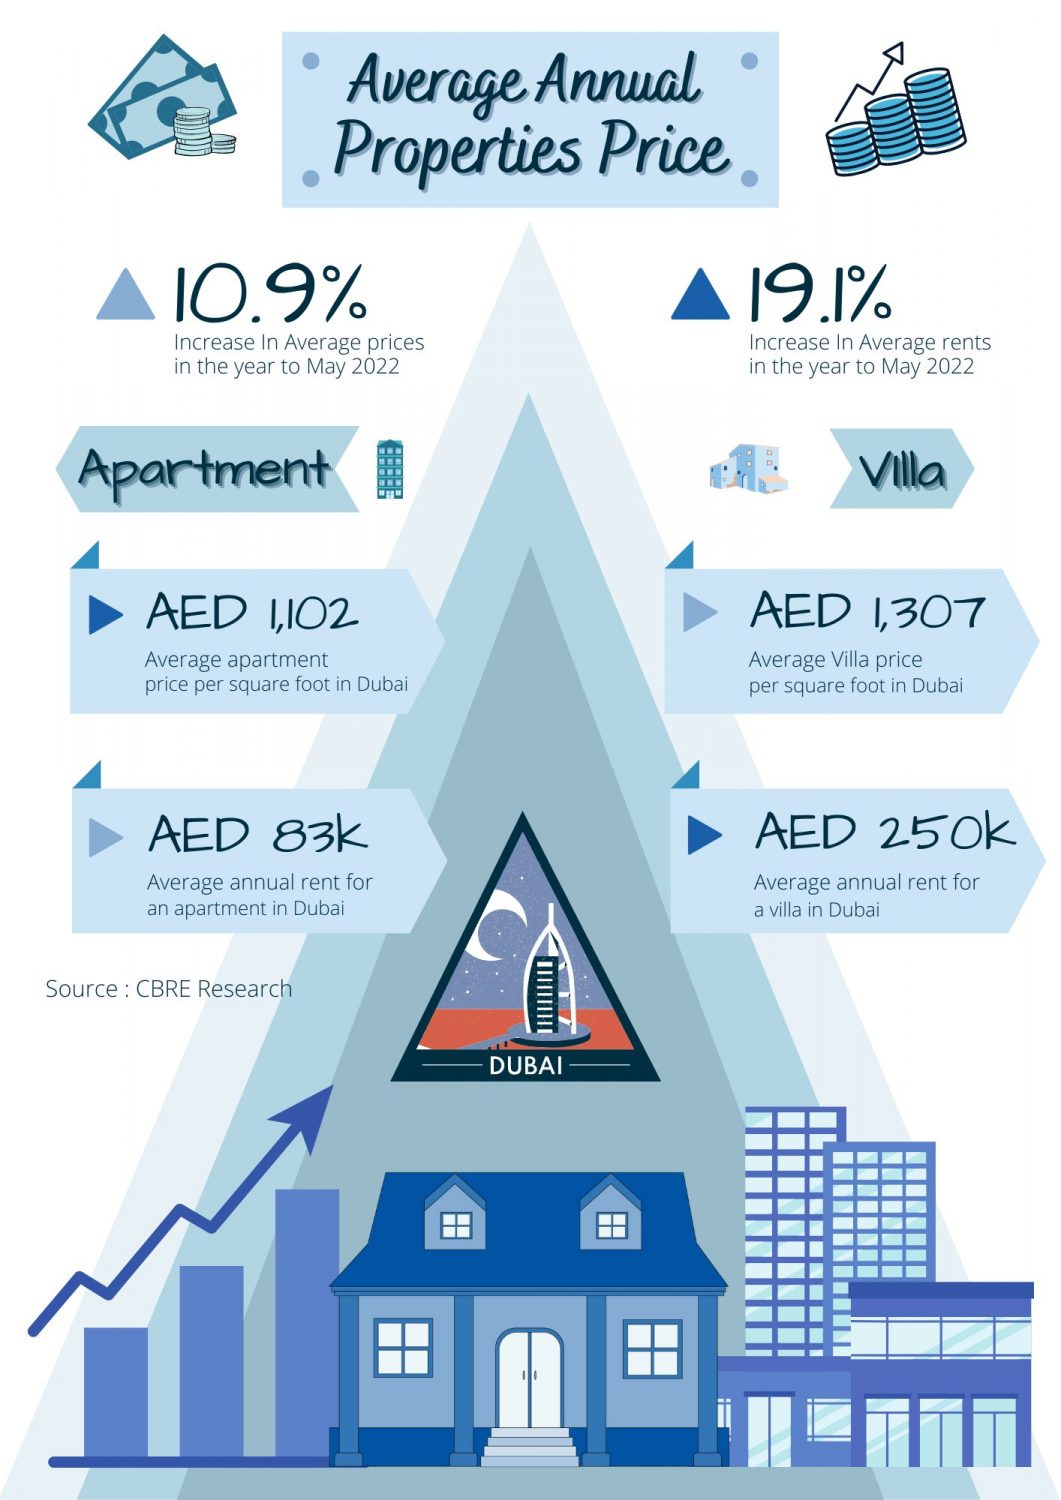 Average Annual Properties Price Increase in Dubai